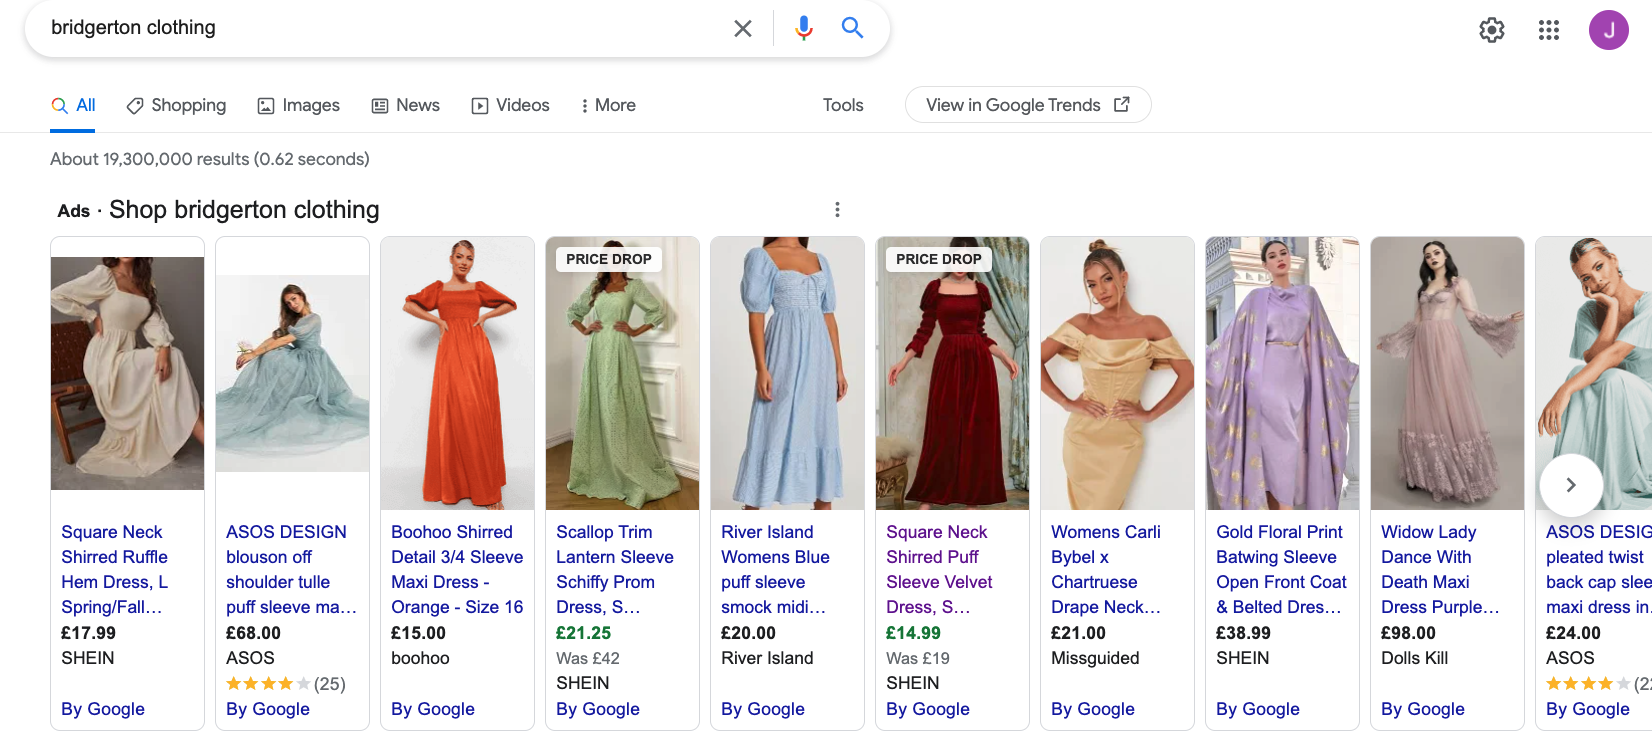 Google Results for Bridgerton Clothing 